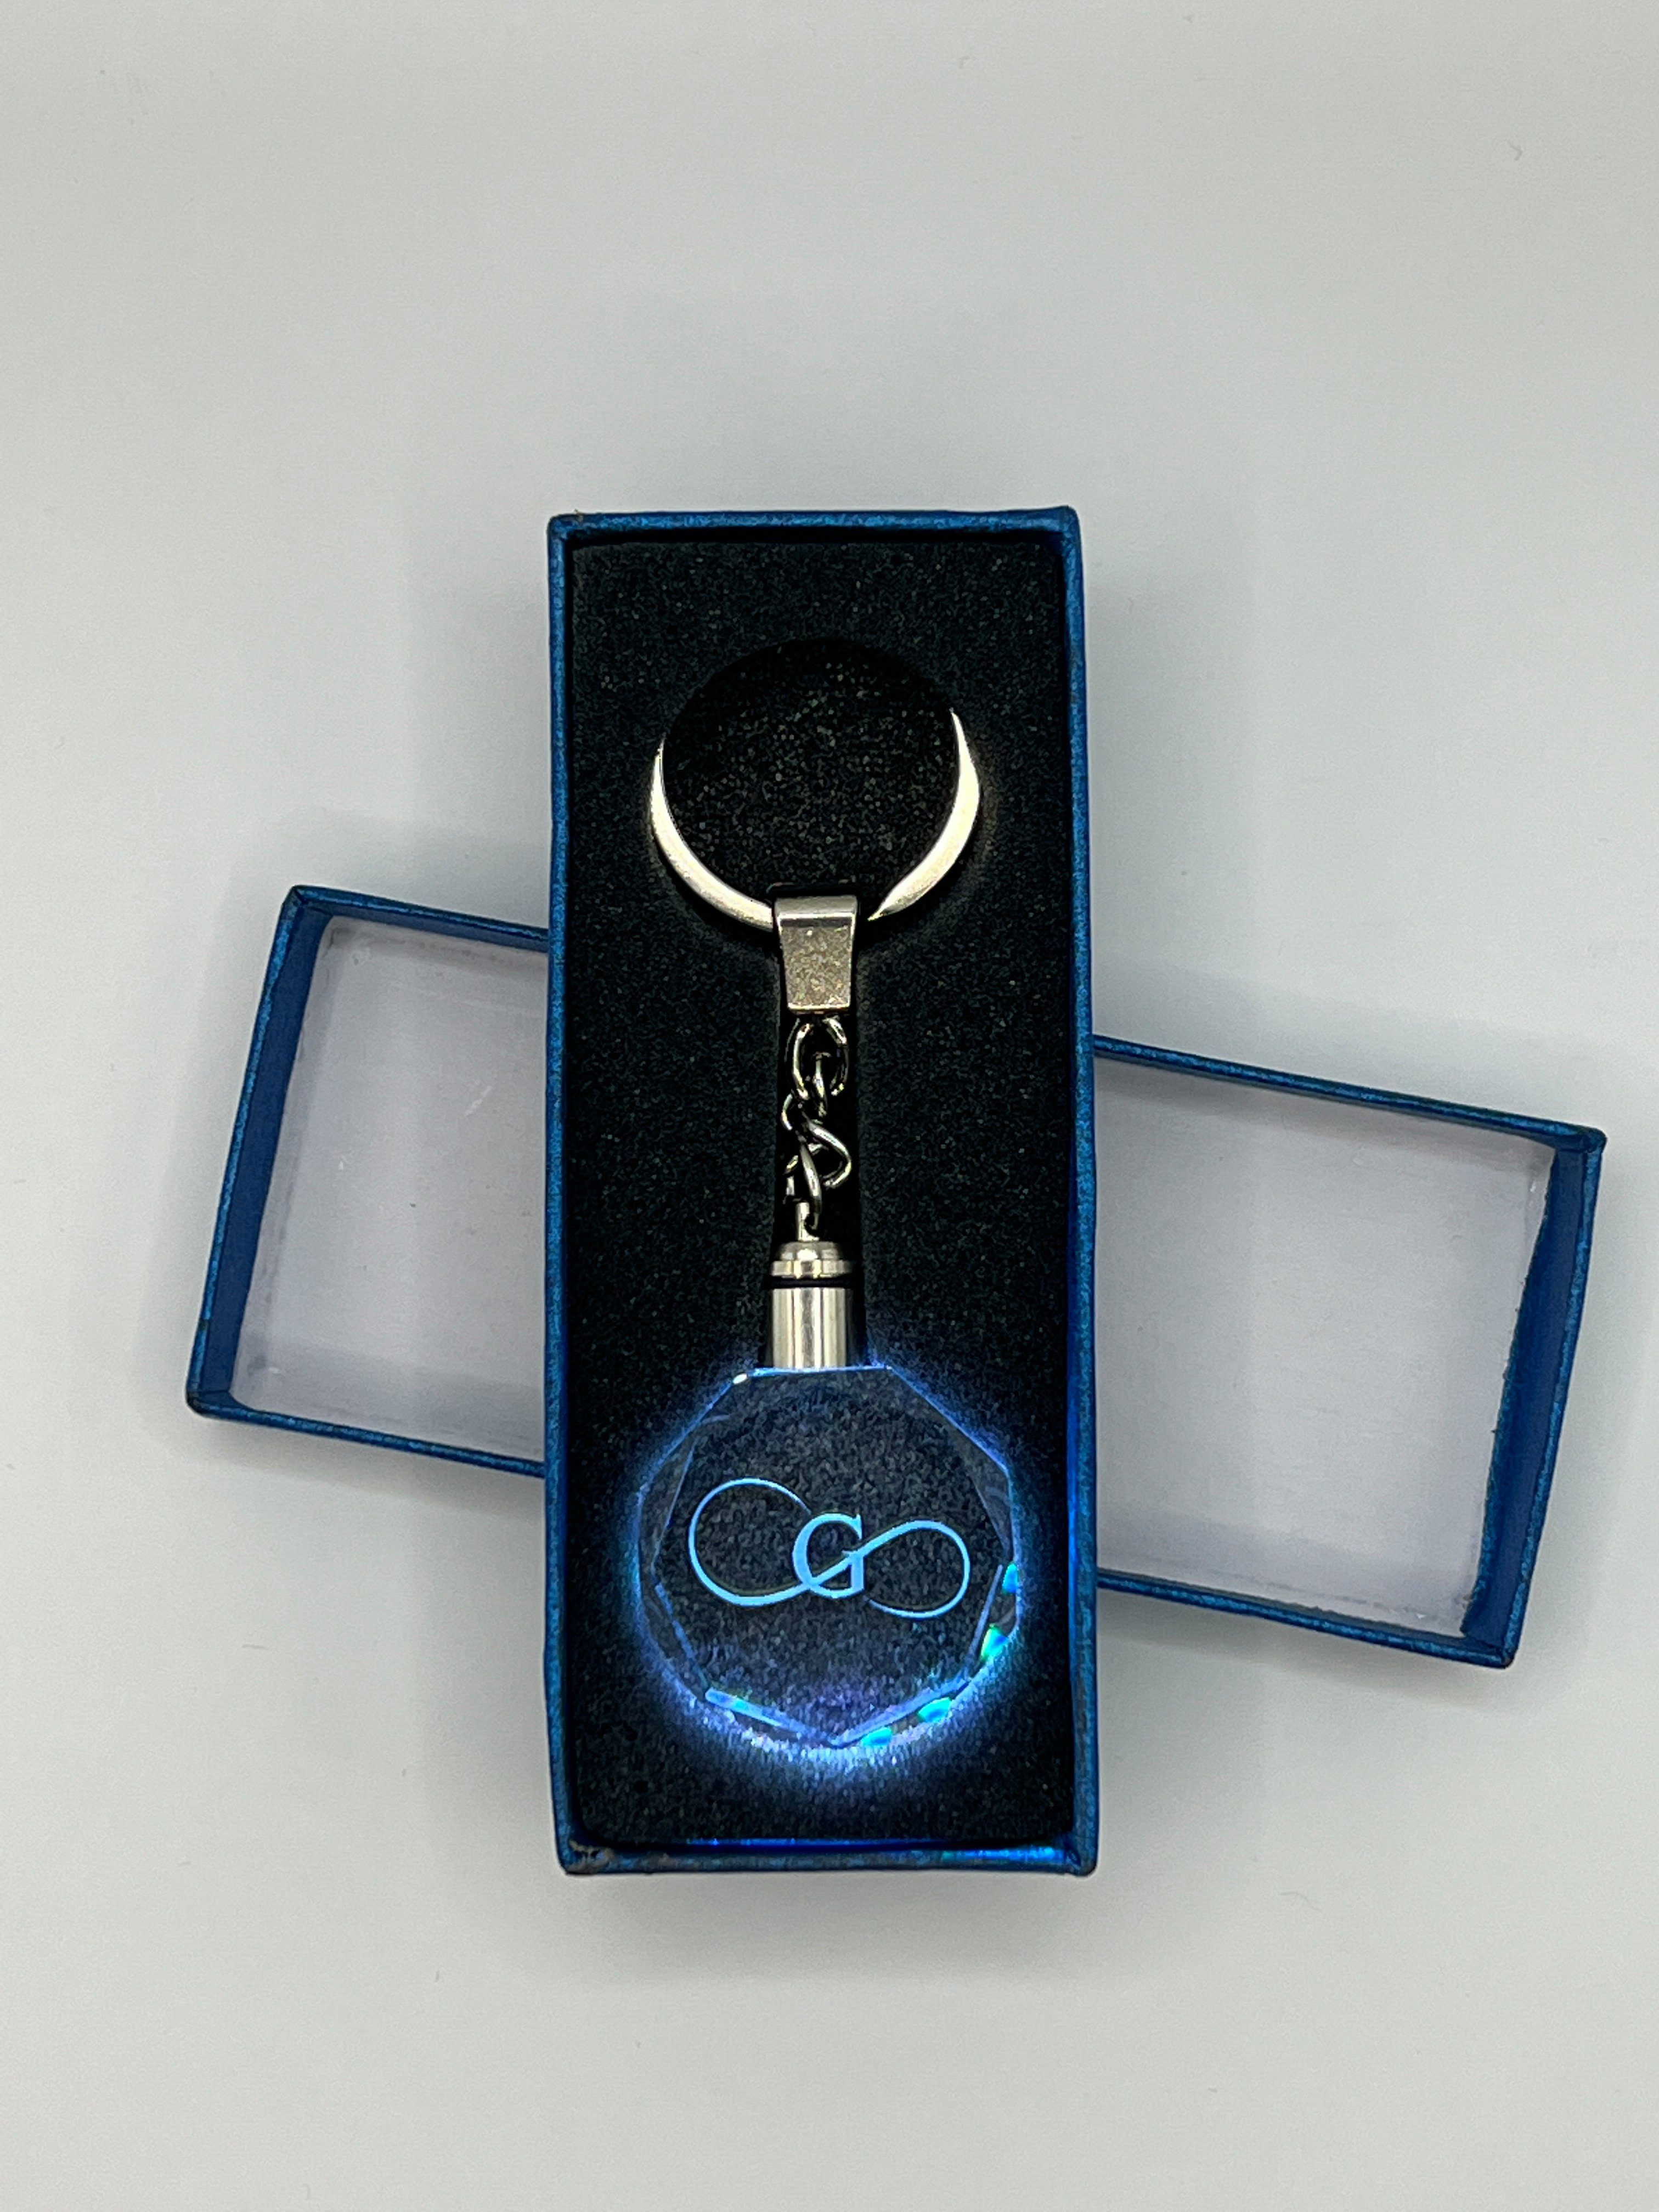 Stelby Schlüsselanhänger Unendlichkeitszeichen Schlüsselanhänger G Multicolor mit Geschenkbox | Schlüsselanhänger